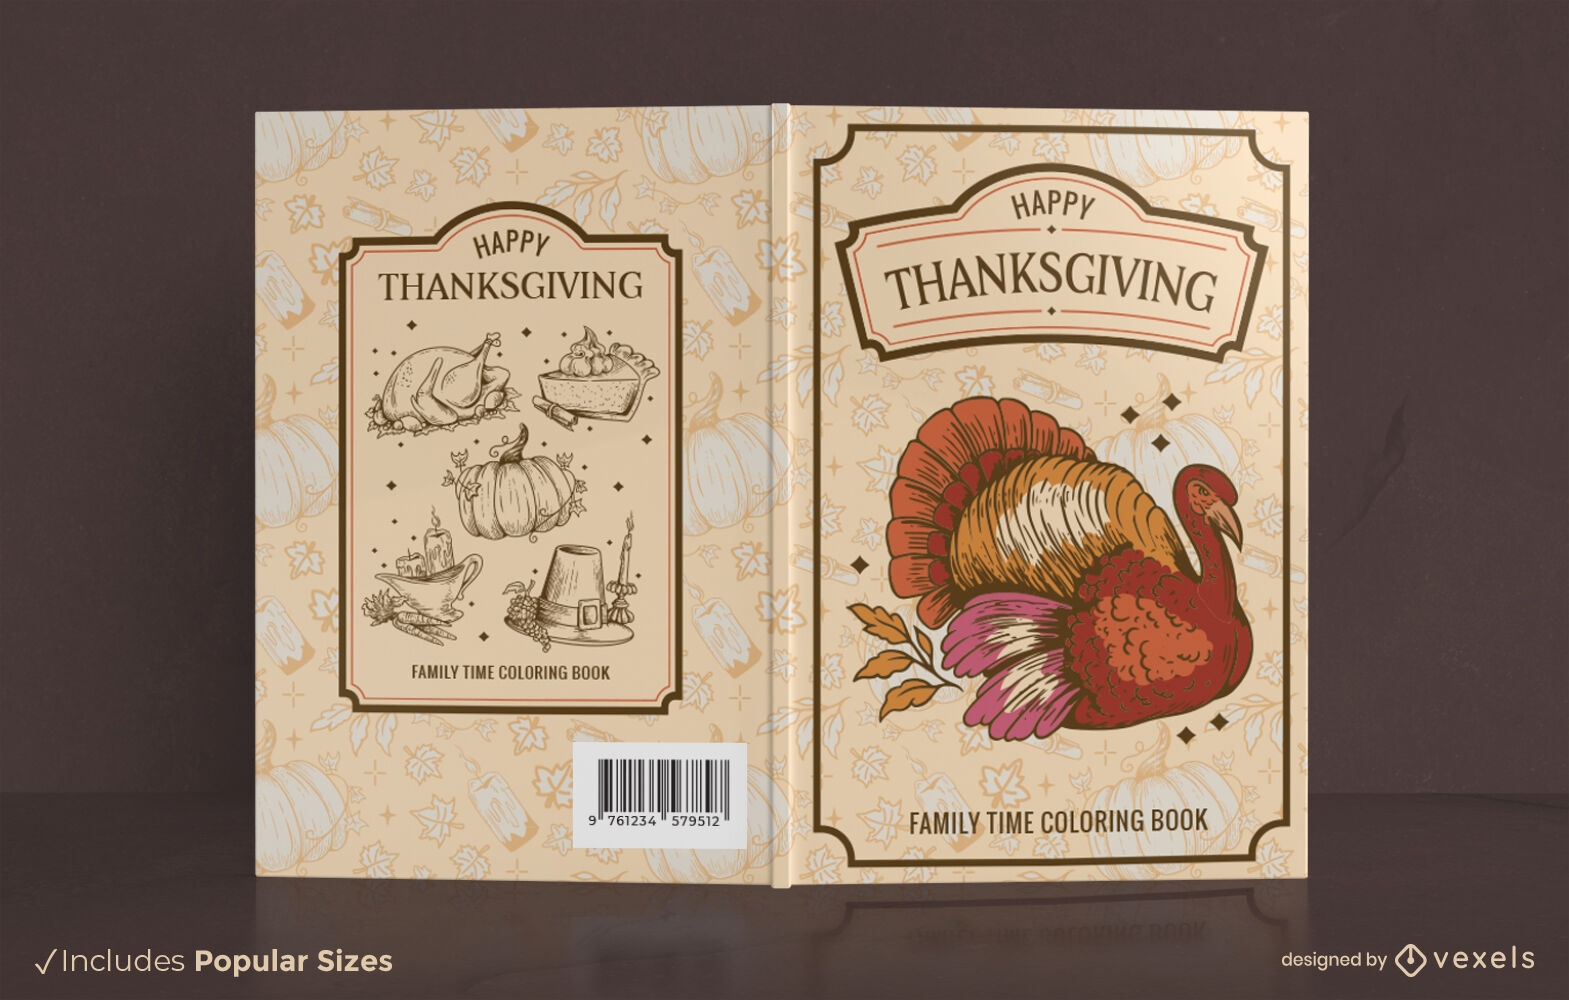 Thanksgiving turkey book cover design